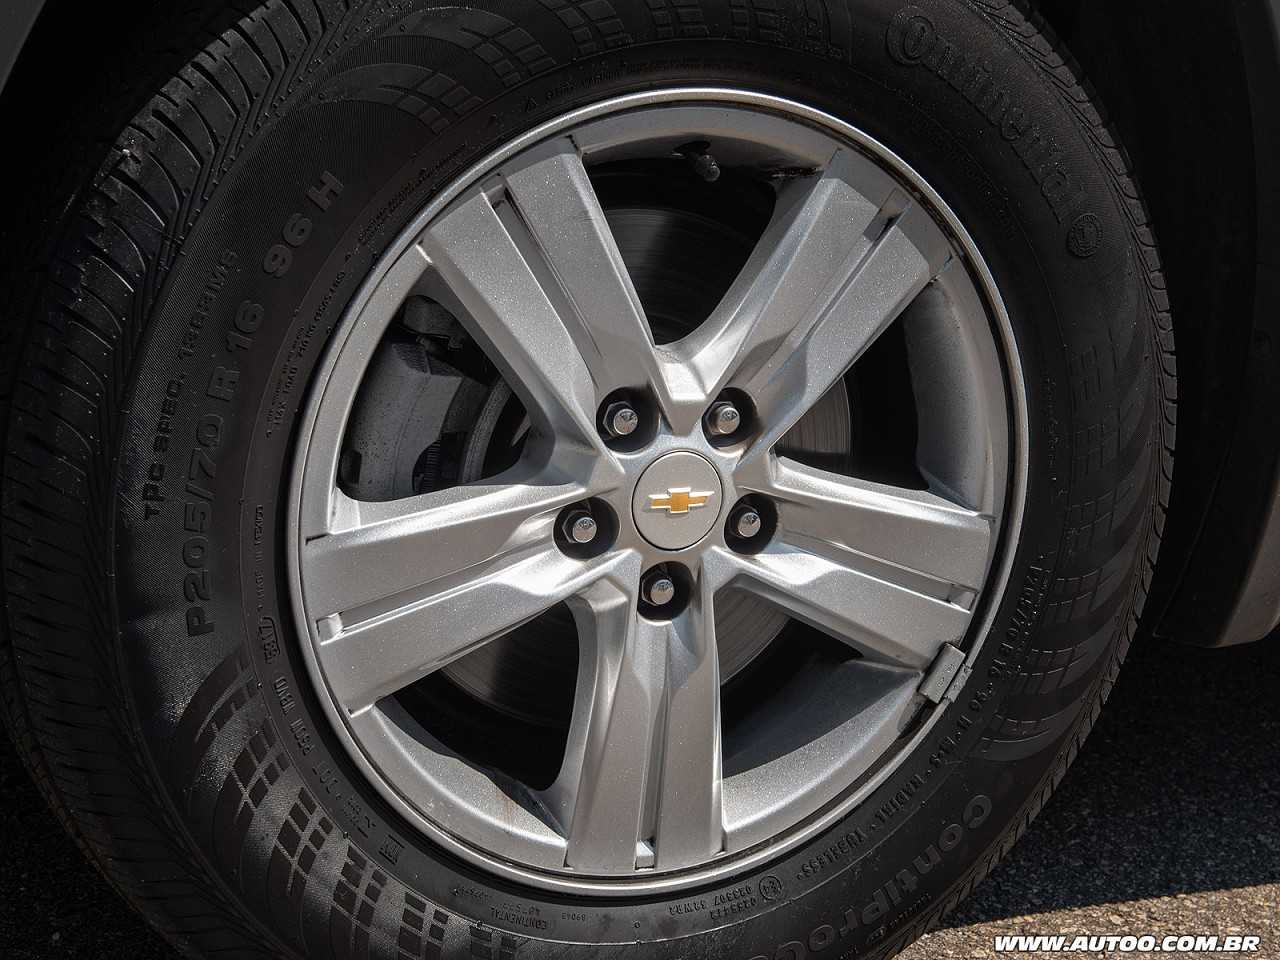 ChevroletTracker 2019 - rodas